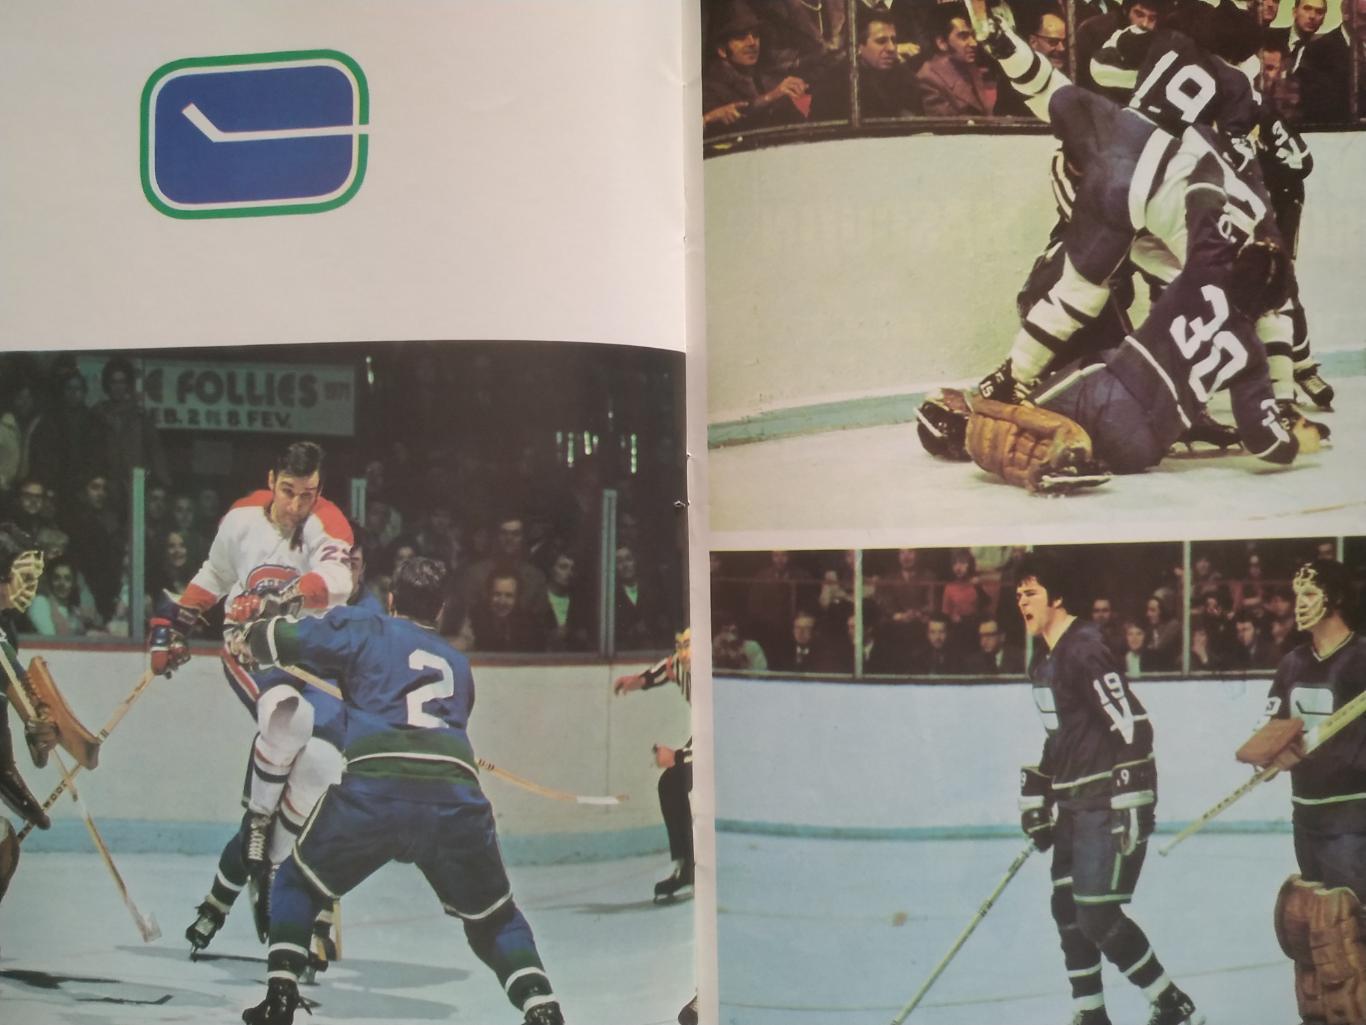 ХОККЕЙ ПРОГРАММА АЛЬБОМ ВАНКУВЕР НХЛ NHL 1971 DEC.04 VANCOUVER PROGRAM 5